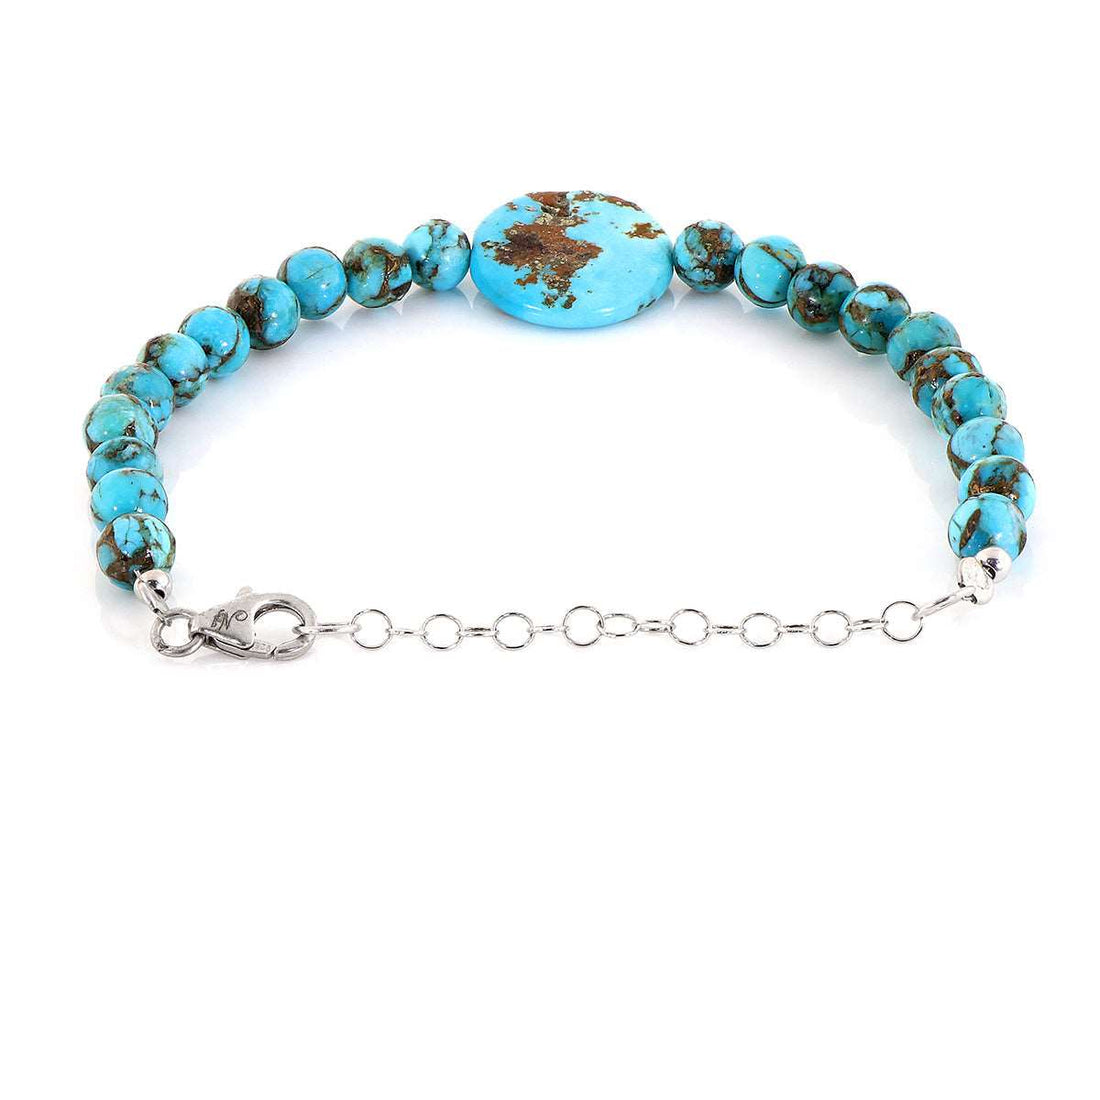 African Turquoise Unisex Silver Bracelet